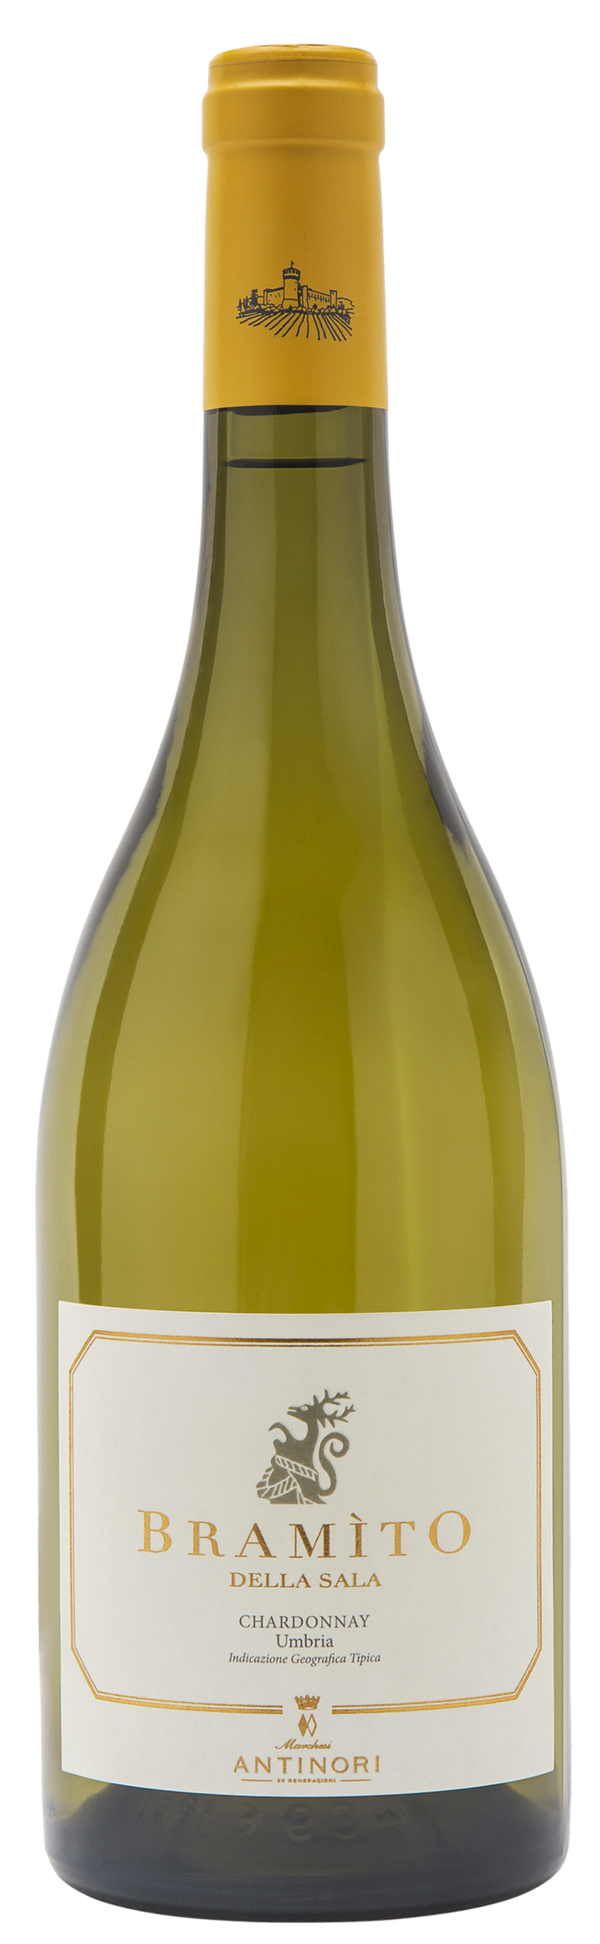 Antinori Bramito del Cervo Chardonnay, 6/750ml